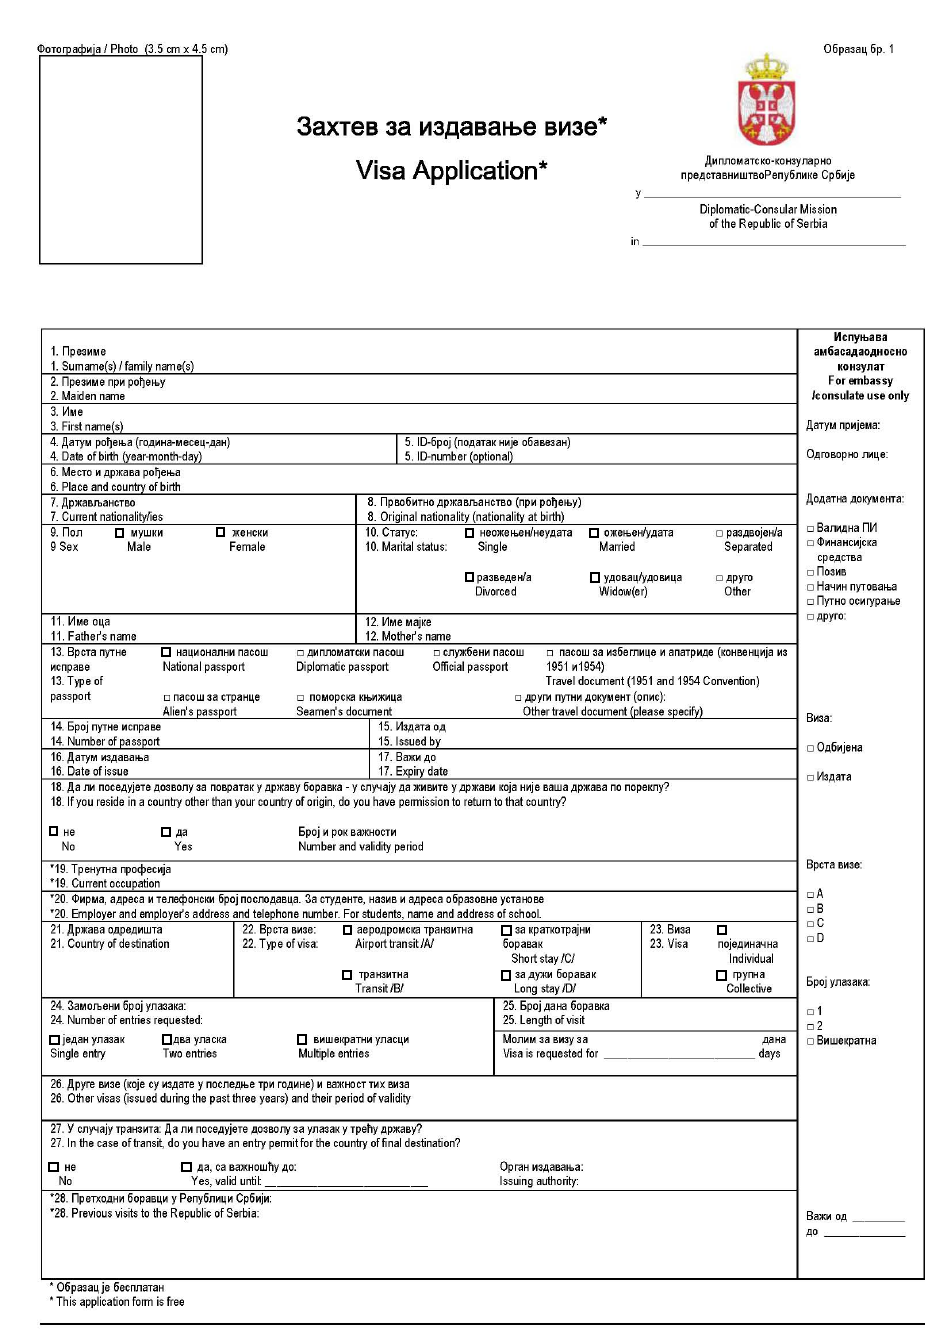 Serbian Visa Application Form - Diplomatic-Consular Mission of the Republic of Serbia (English / Serbian Shona), Page 1